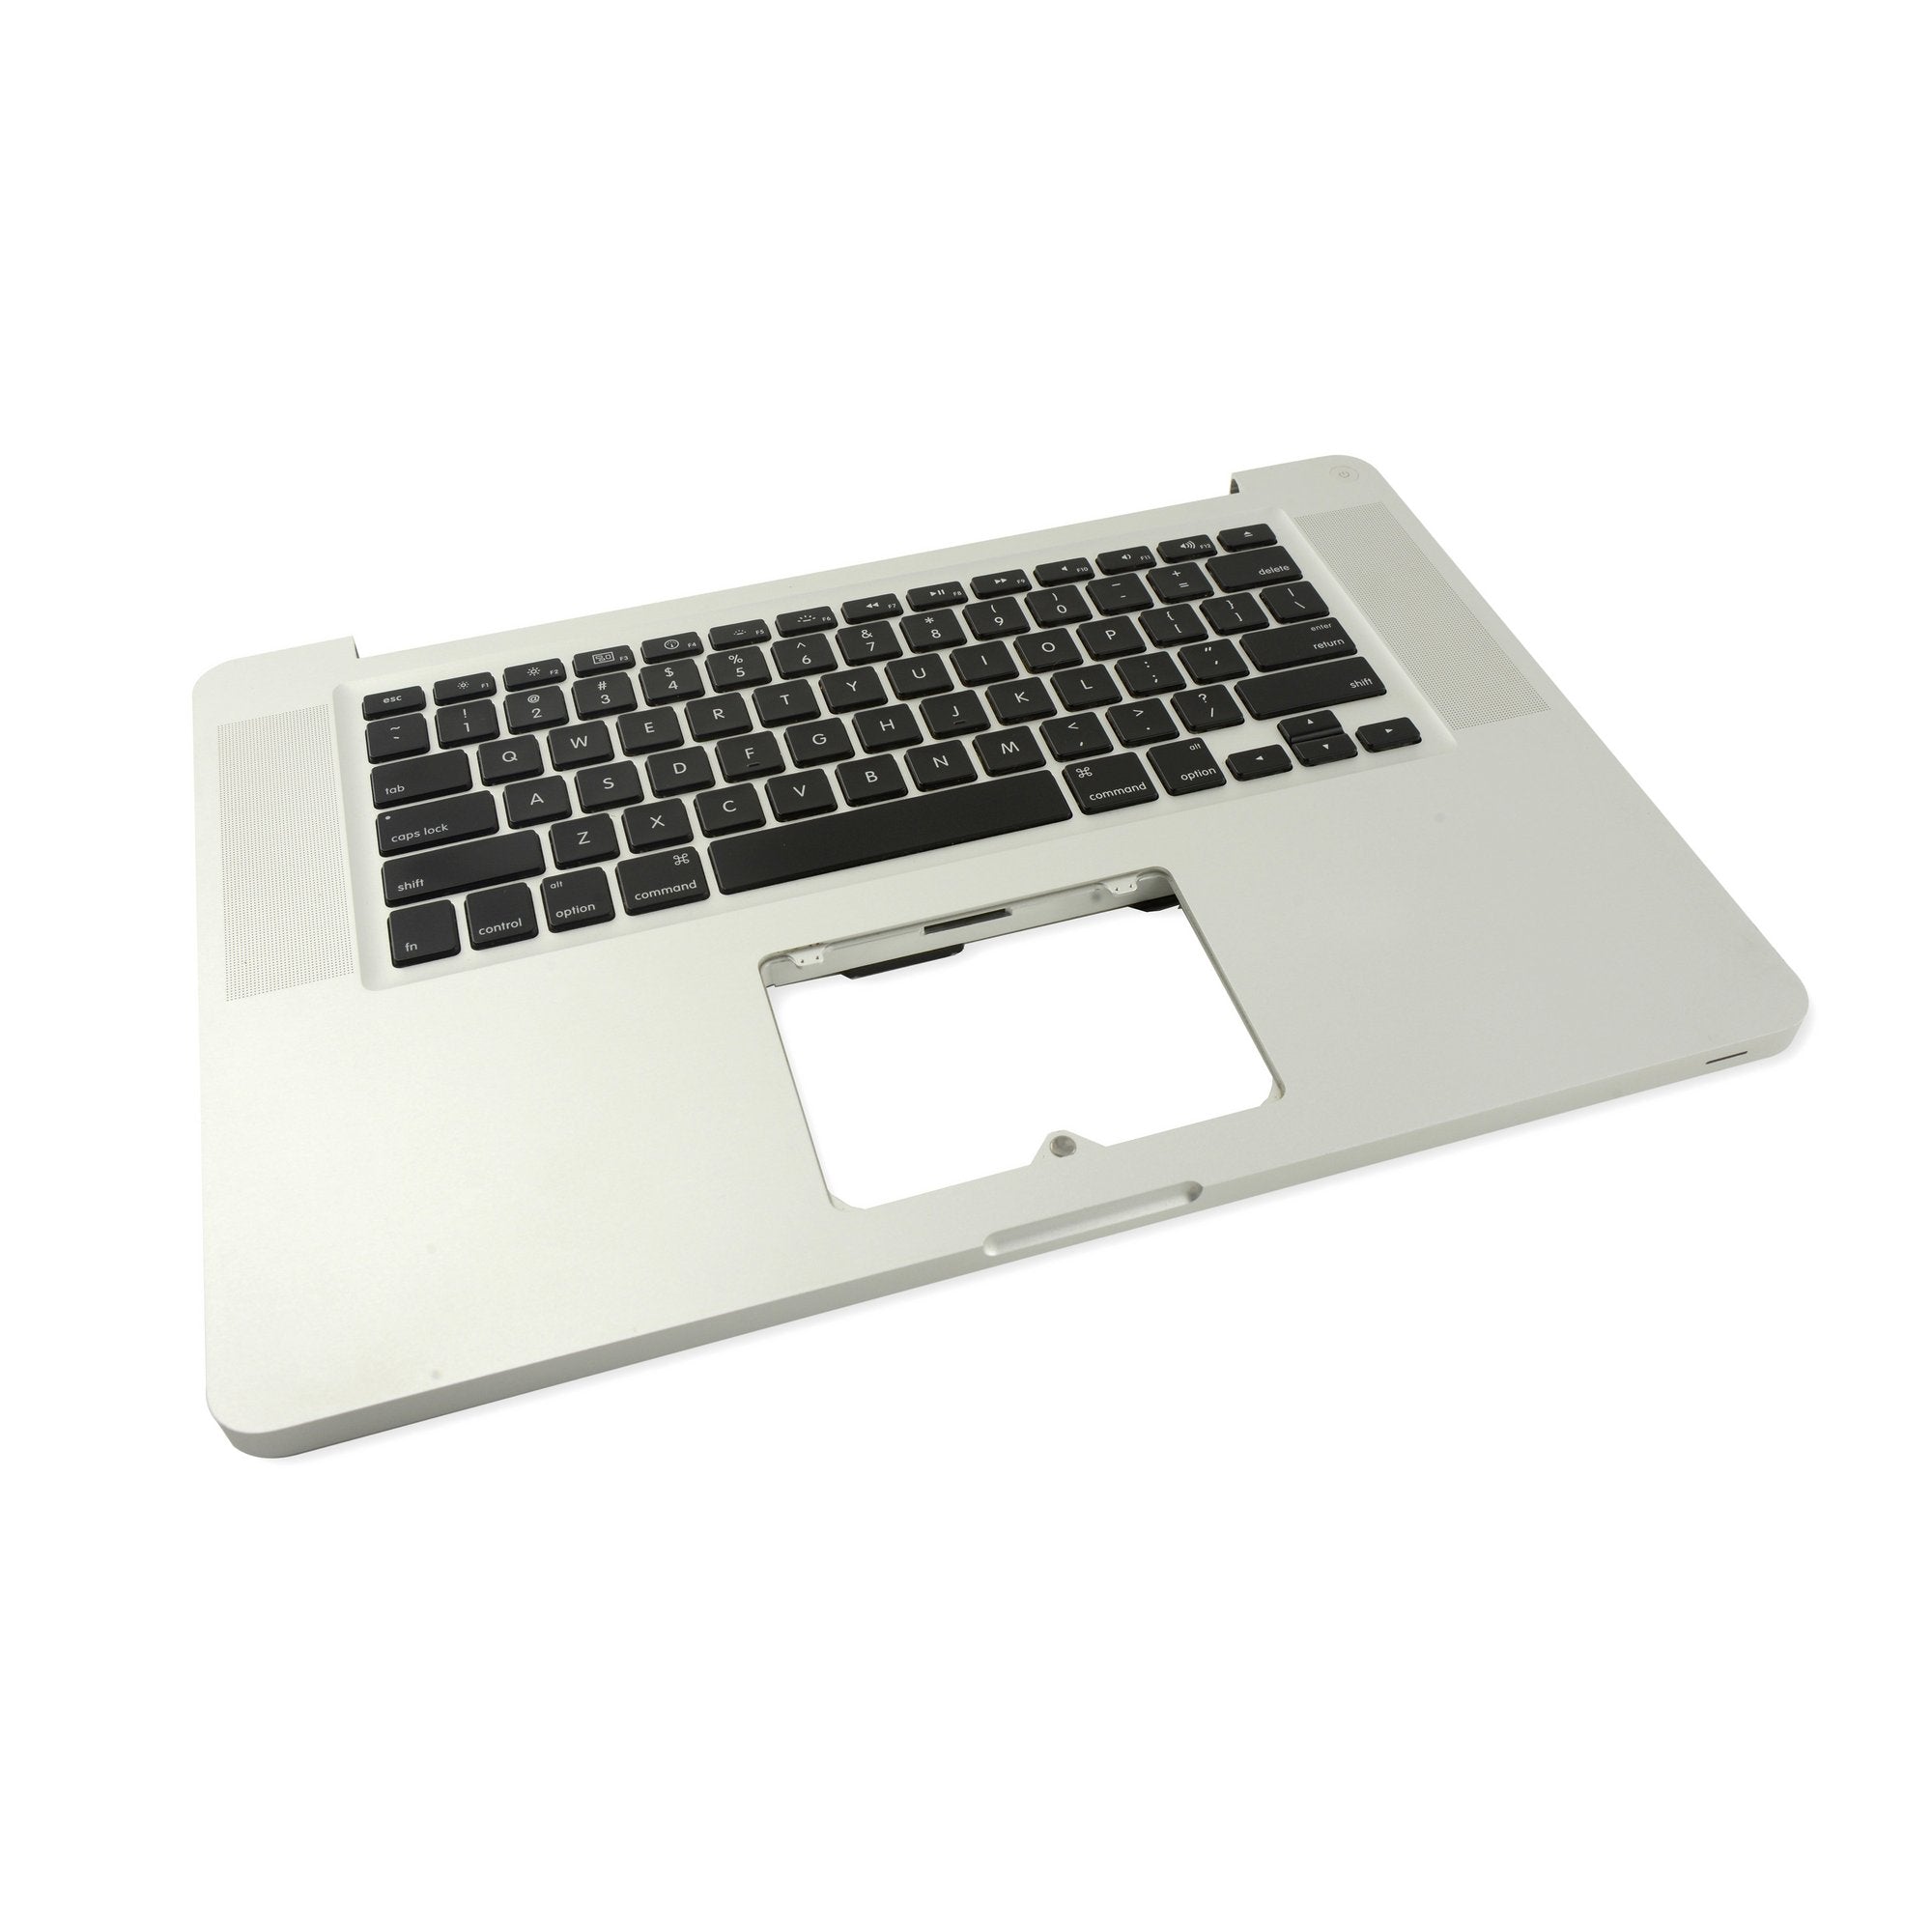 MacBook Pro 15" Unibody (Mid 2009) Upper Case